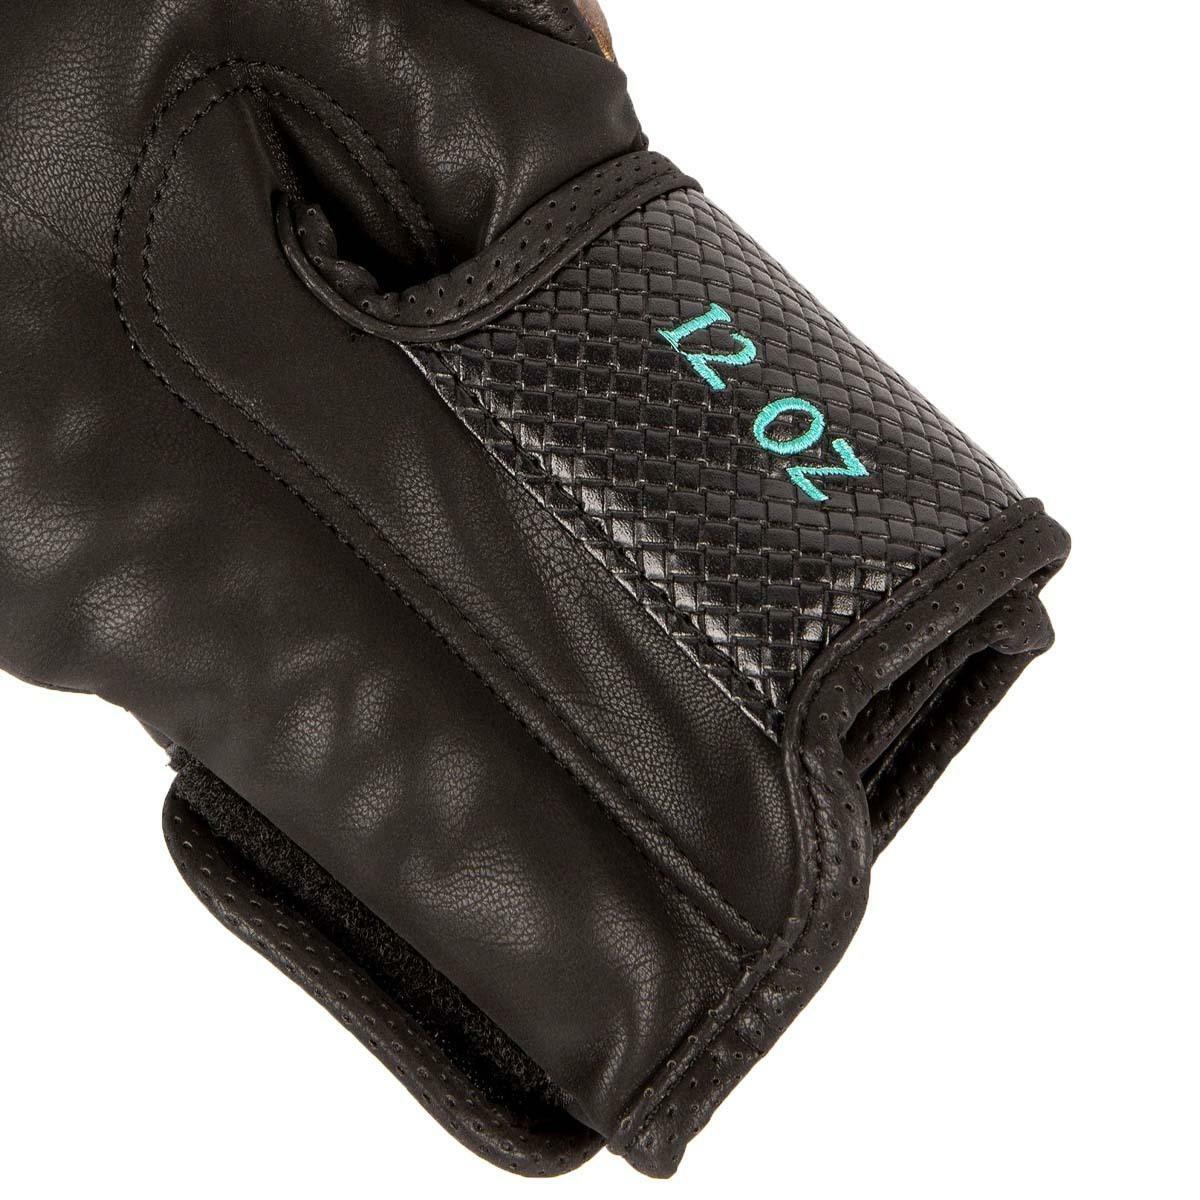 Venum Assassins Creed Boxing Gloves VEN-04489-001